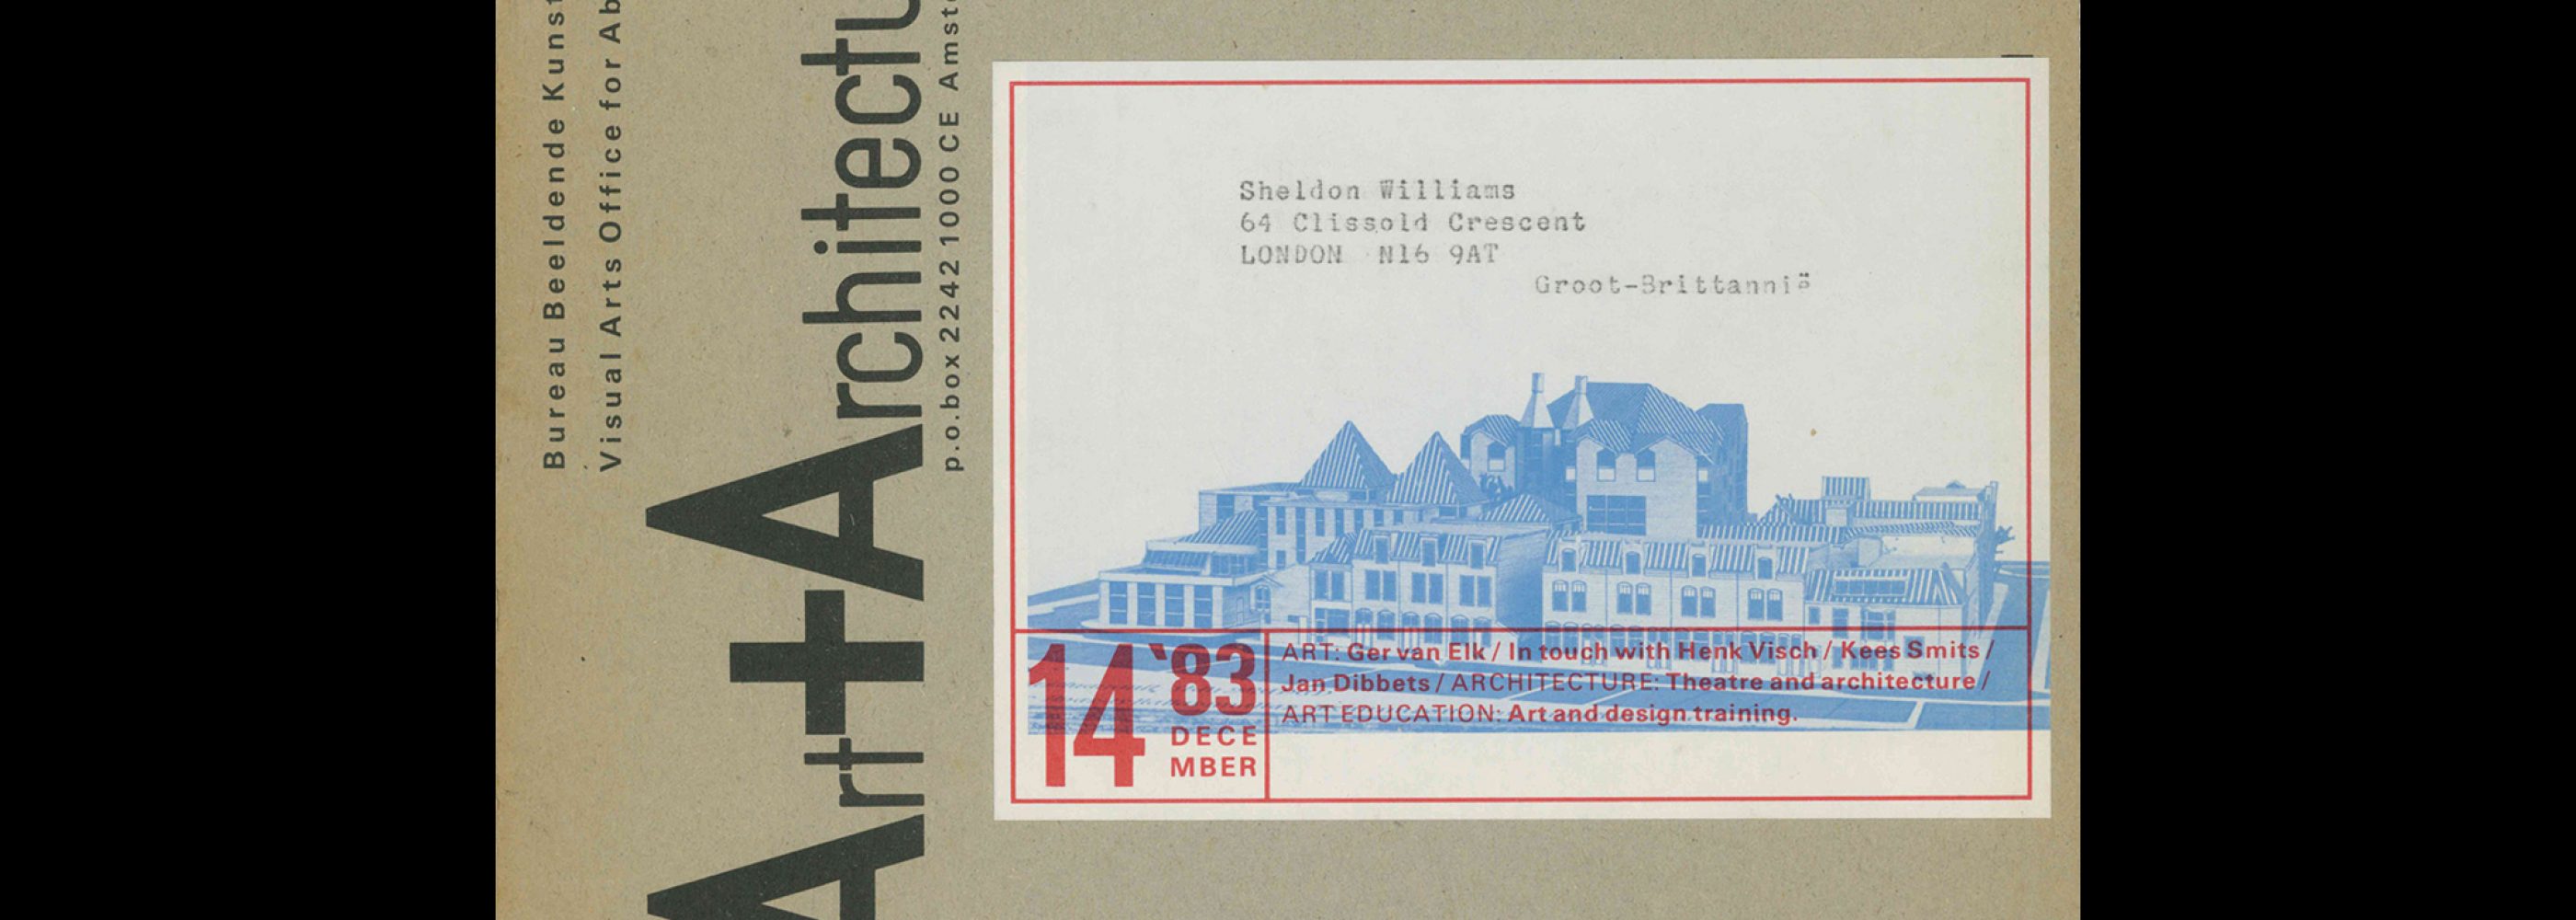 Dutch Art + Architecture Today 14, 1983. Designed by Jan van Toorn